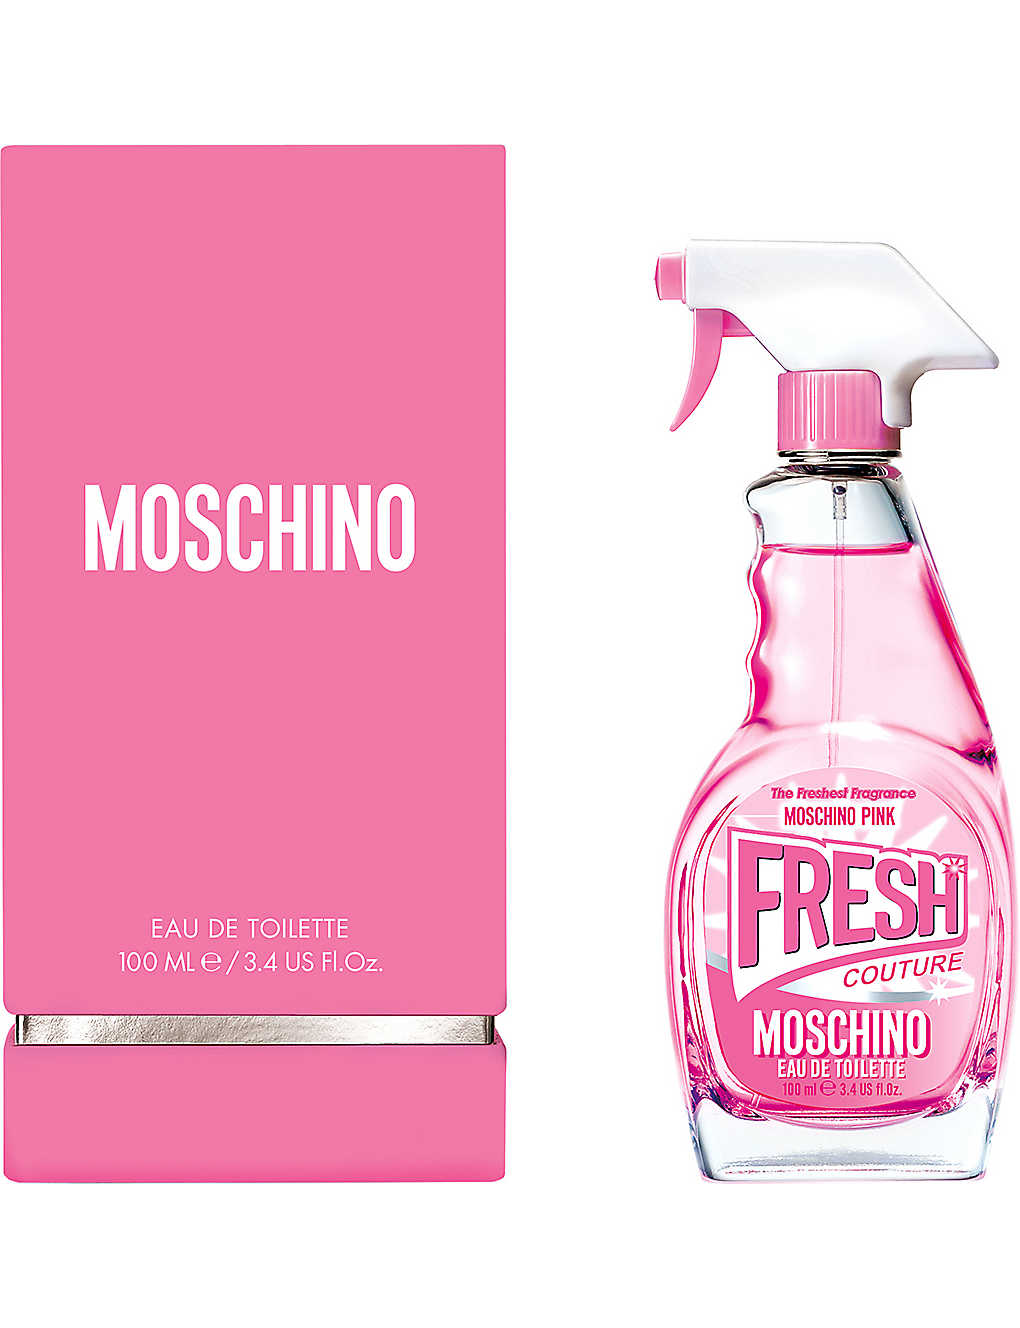 MOSCHINO Pink Fresh Couture eau de toilette 100ml